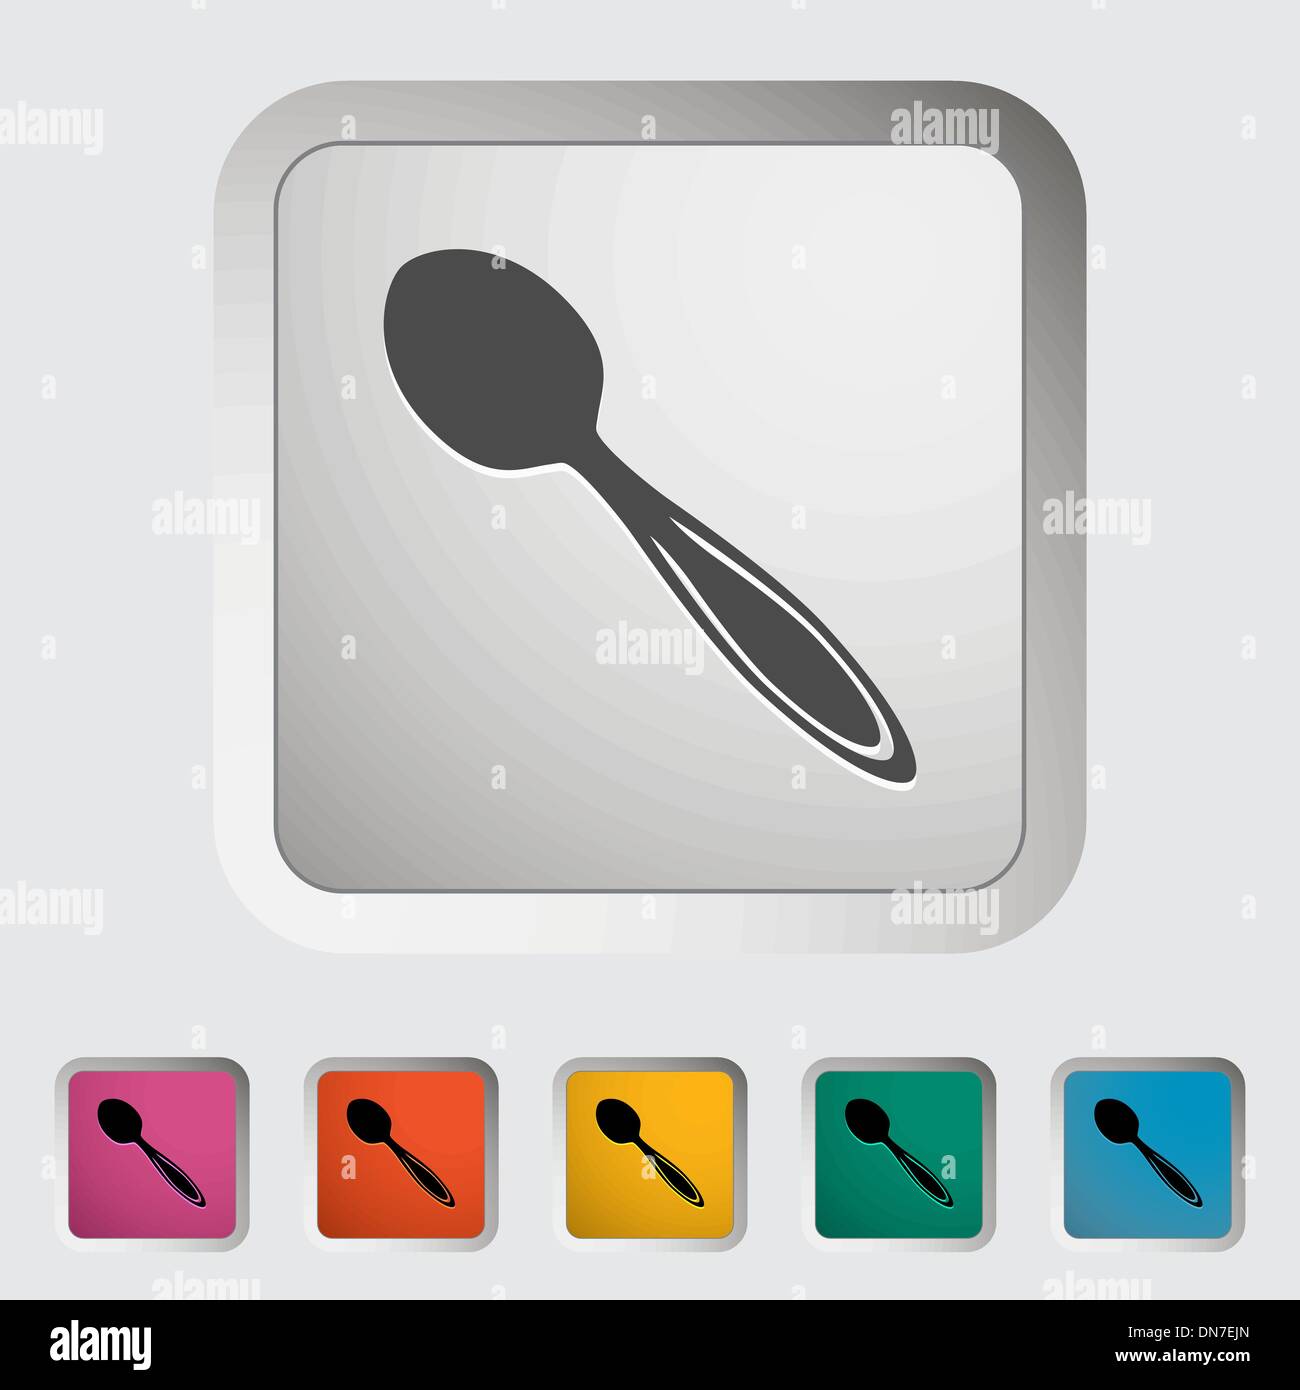 Spoon icon Stock Vector